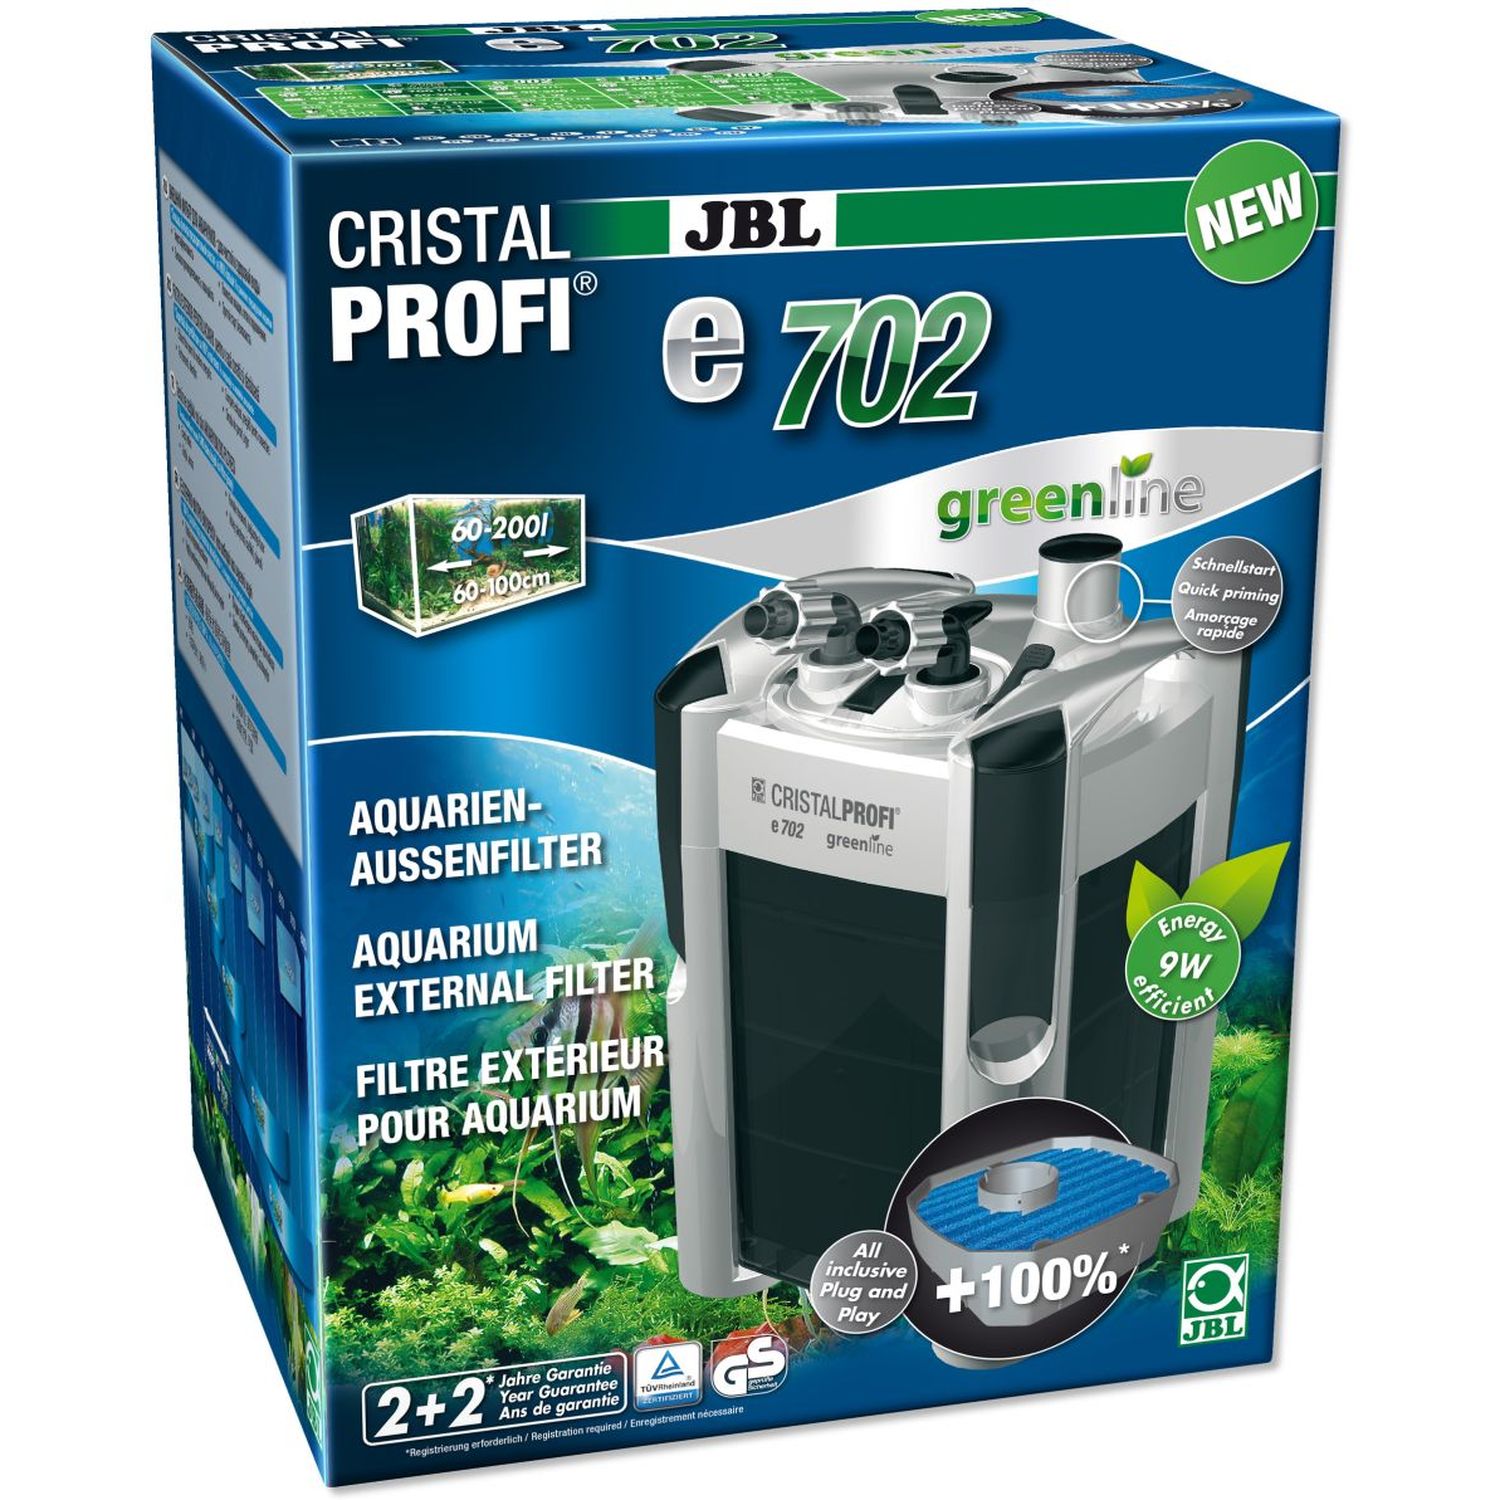 Внешний фильтр JBL CristalProfi e702 greenline 58 820 для аквариума до 200 л - фото 1